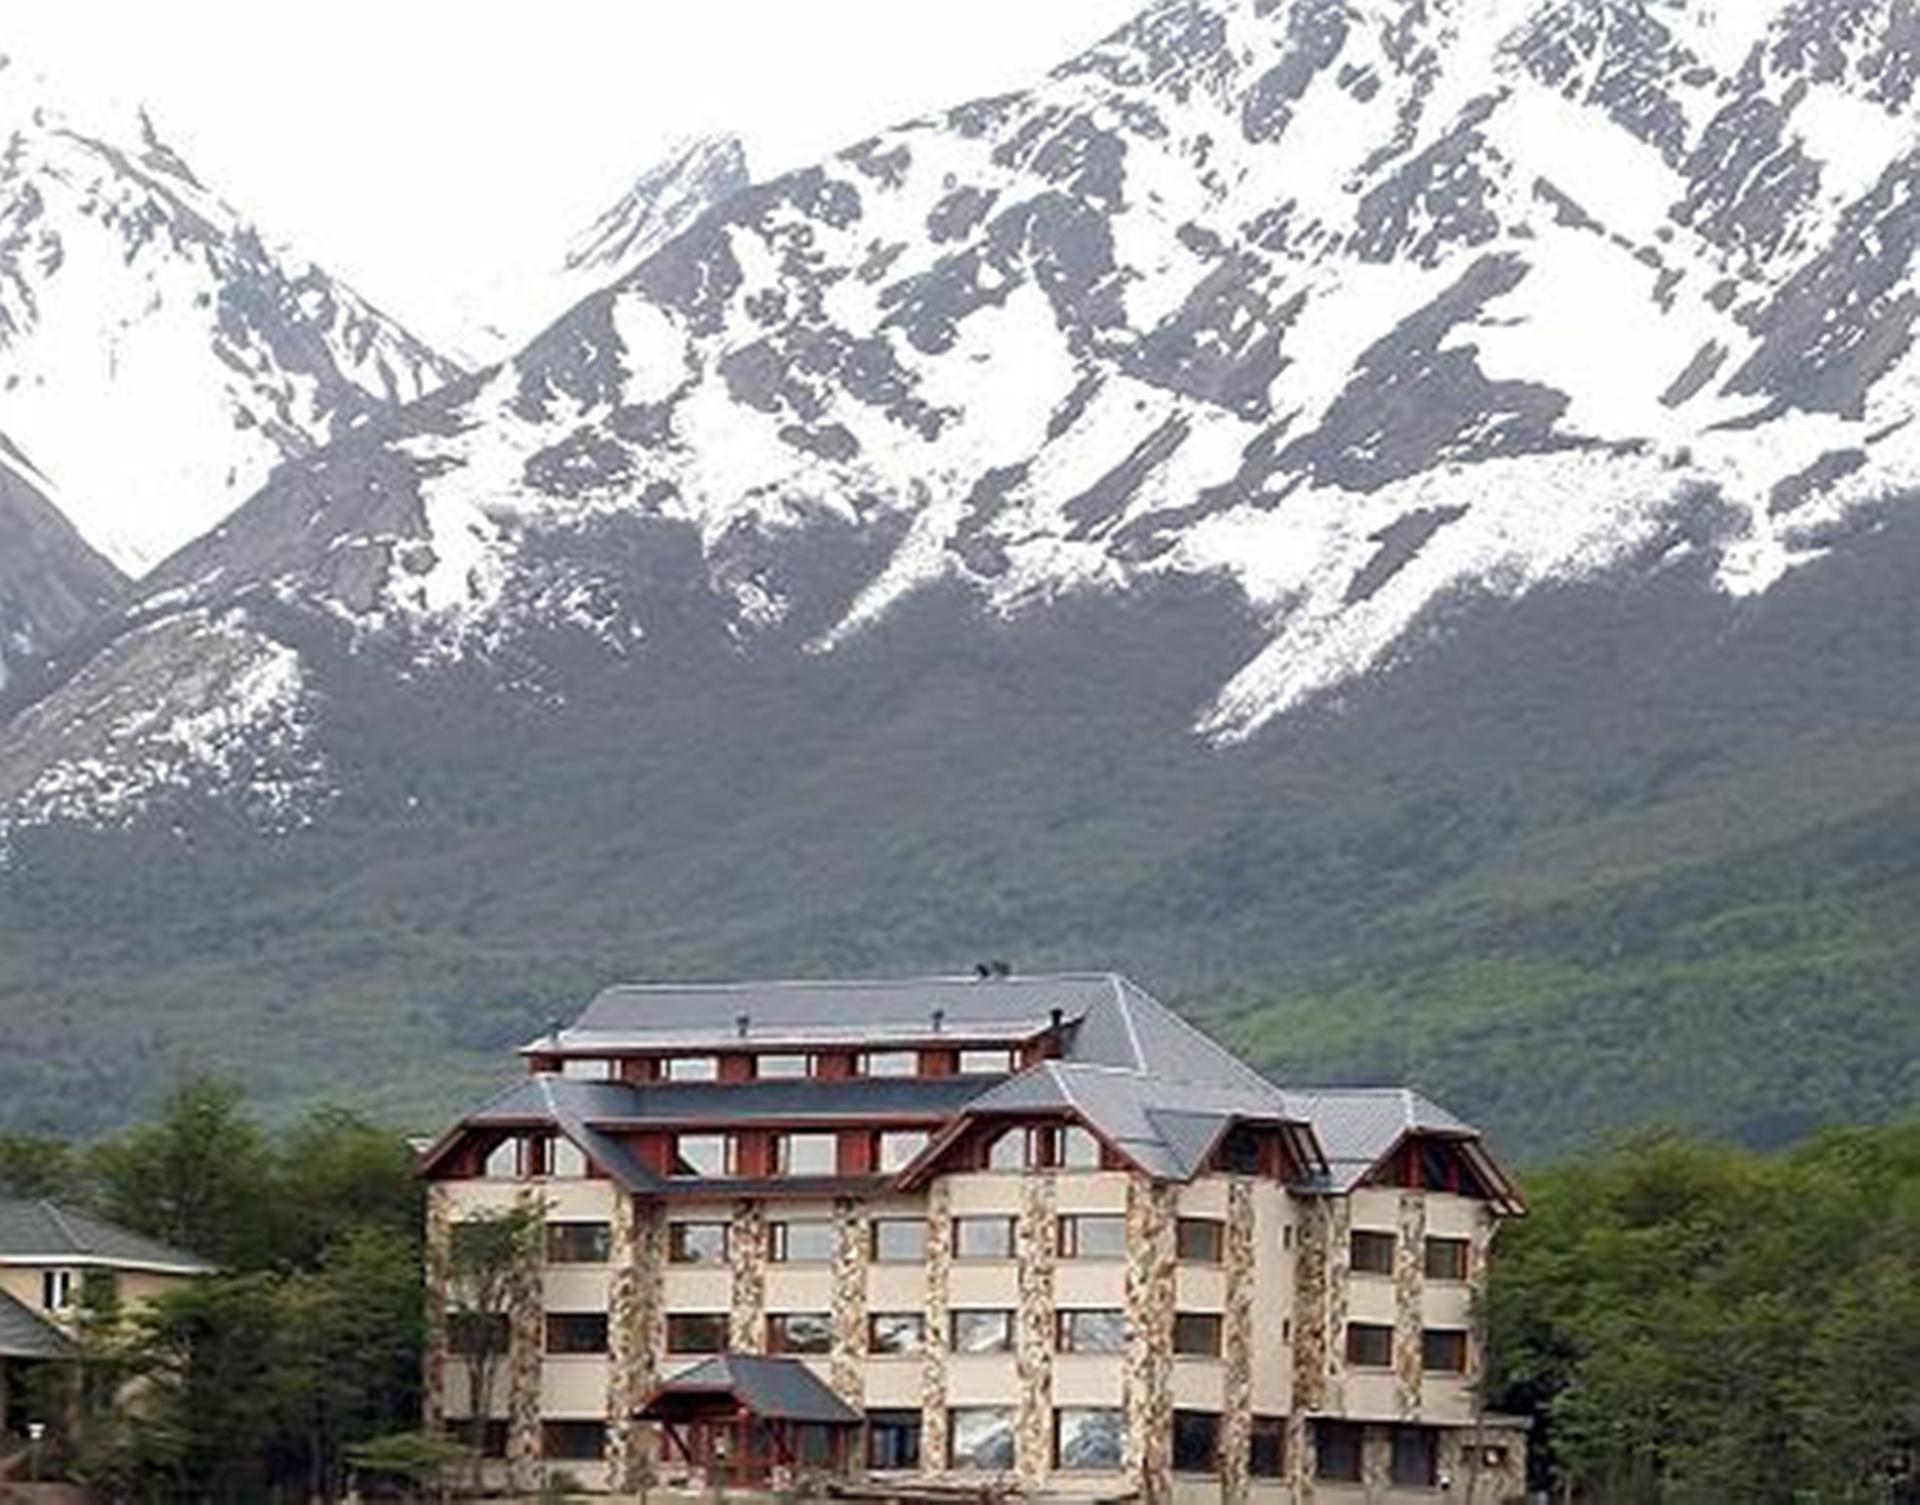 Costa Ushuaia Hotel ภายนอก รูปภาพ